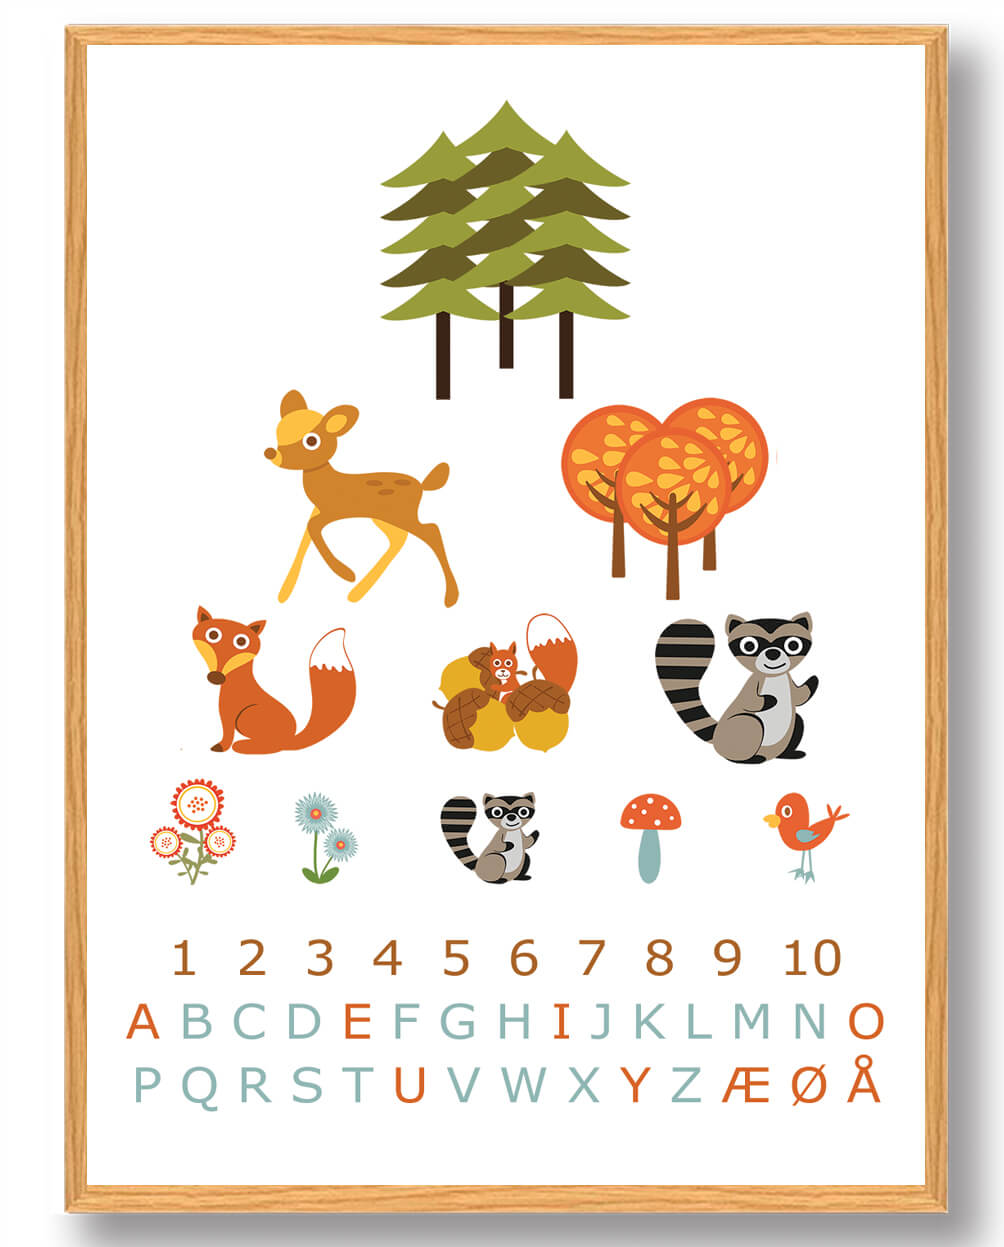 Synstavle skoven - plakat